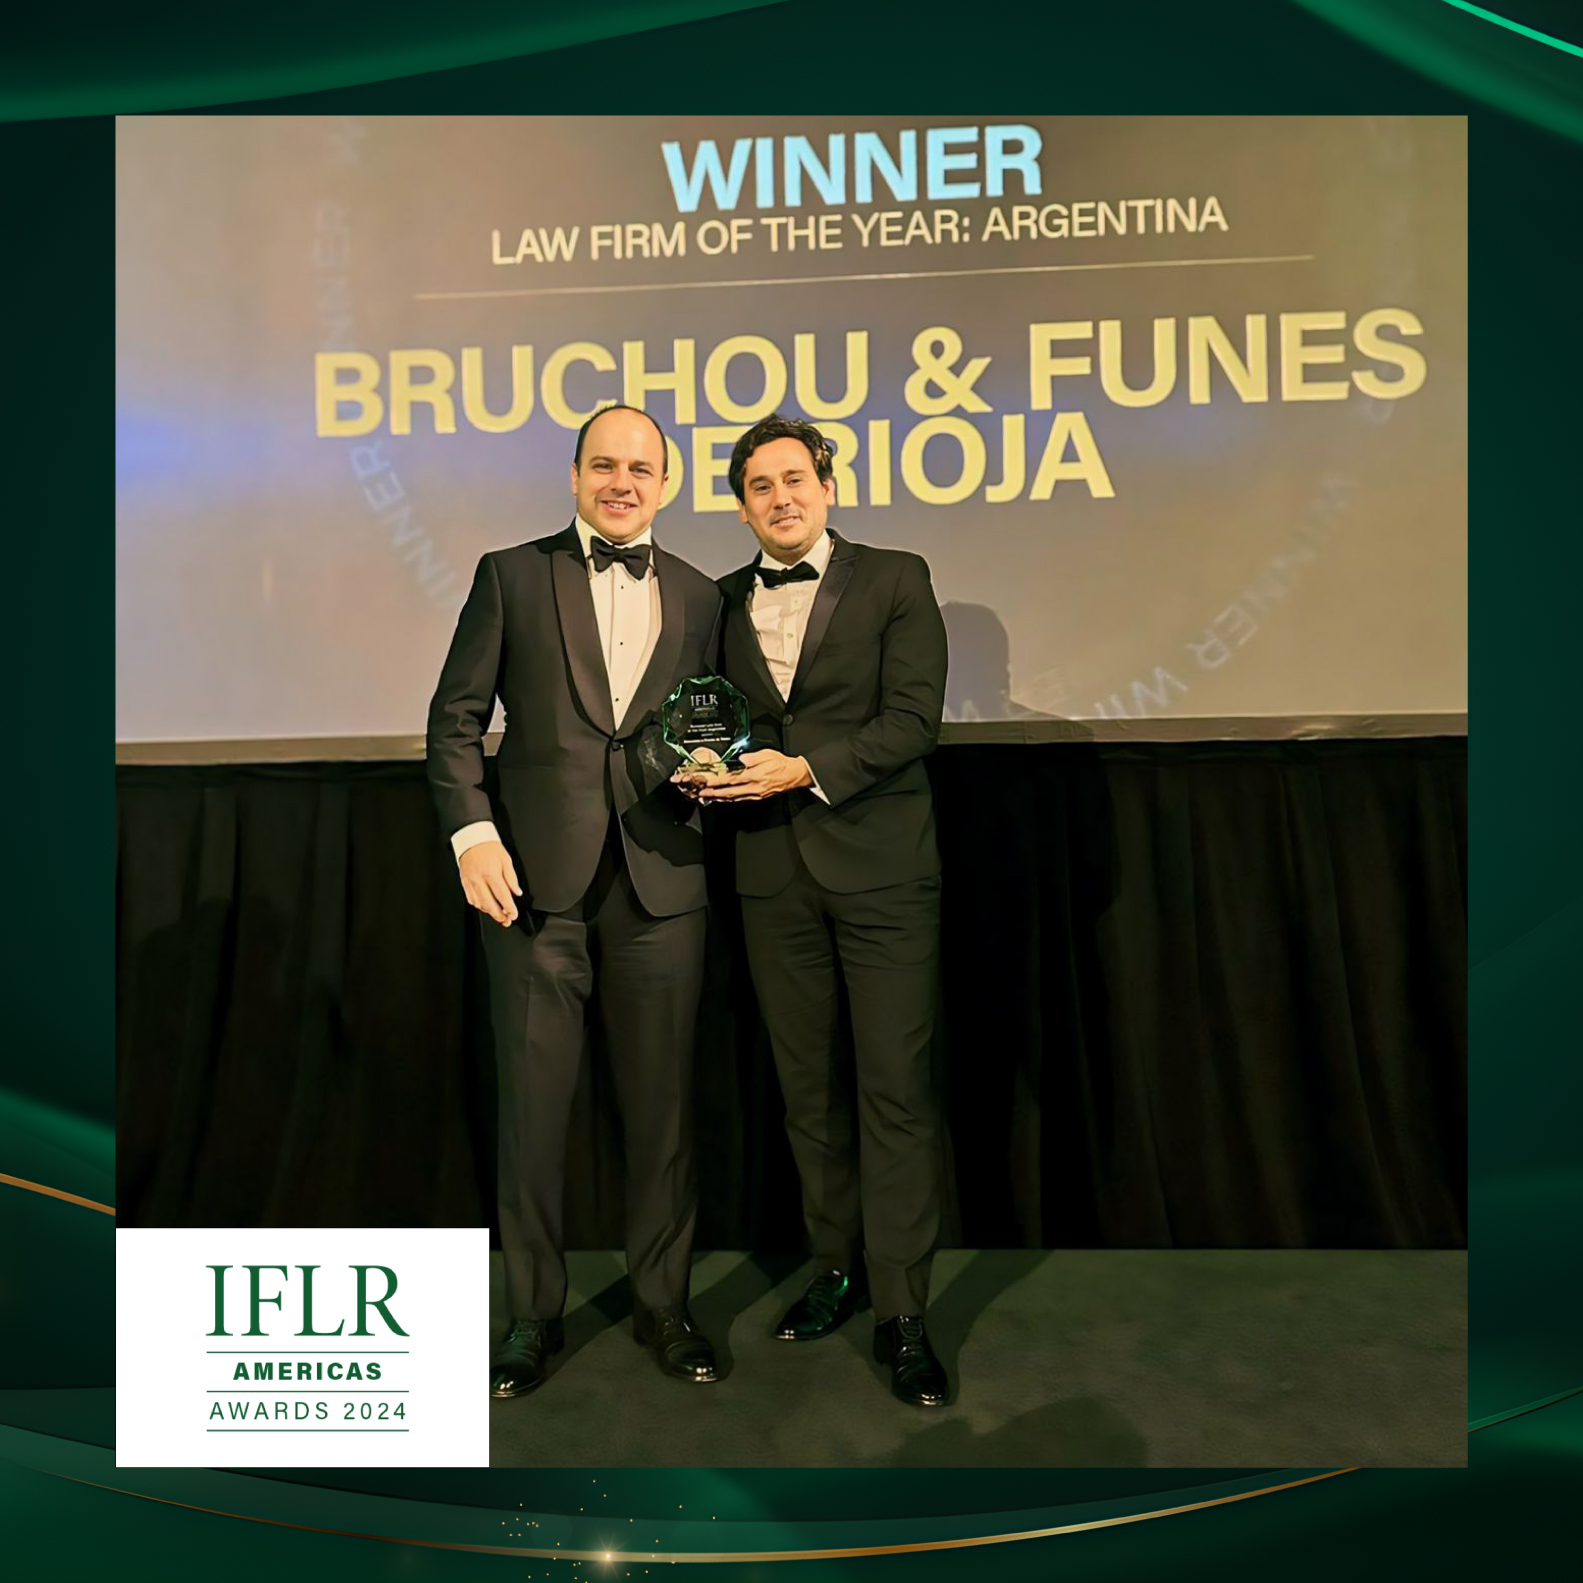 Bruchou & Funes de Rioja reconocidos como National Law Firm of the Year: Argentina por IFLR Americas Awards 2024